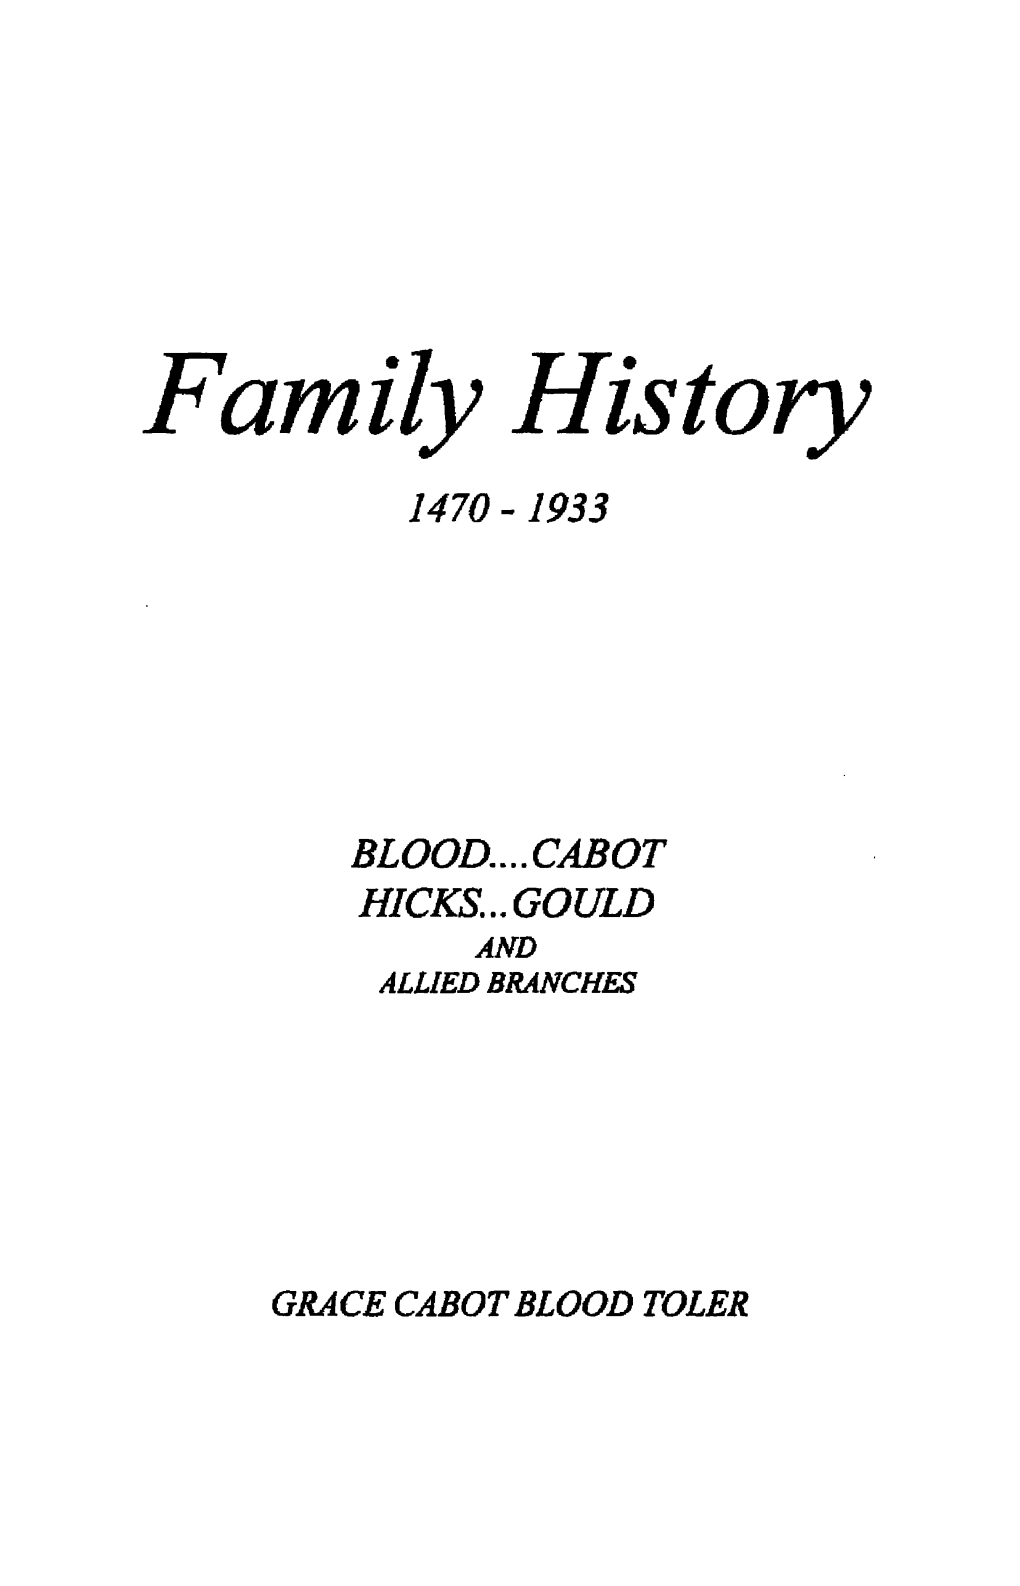 (Goff) Genealogy